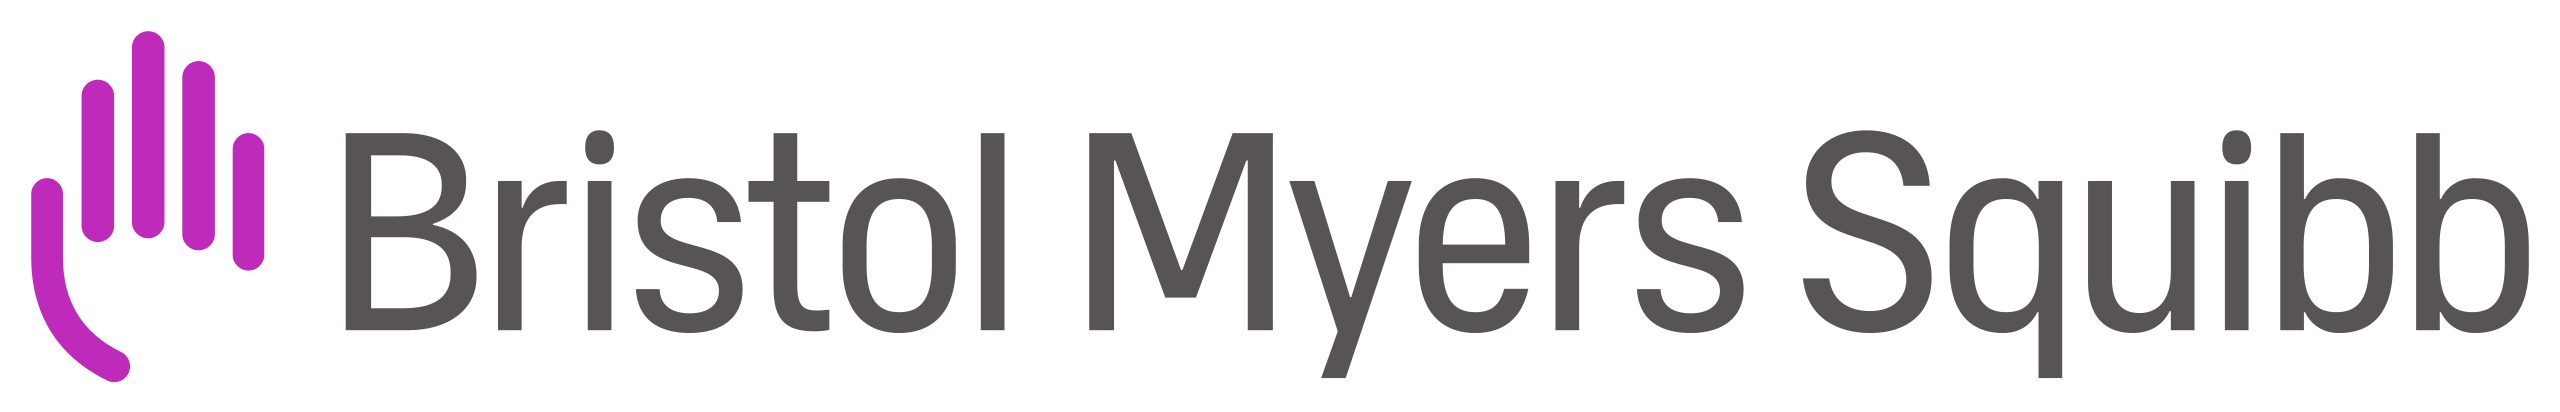 Bristol-Myers_Squibb_logo_(2020).svg